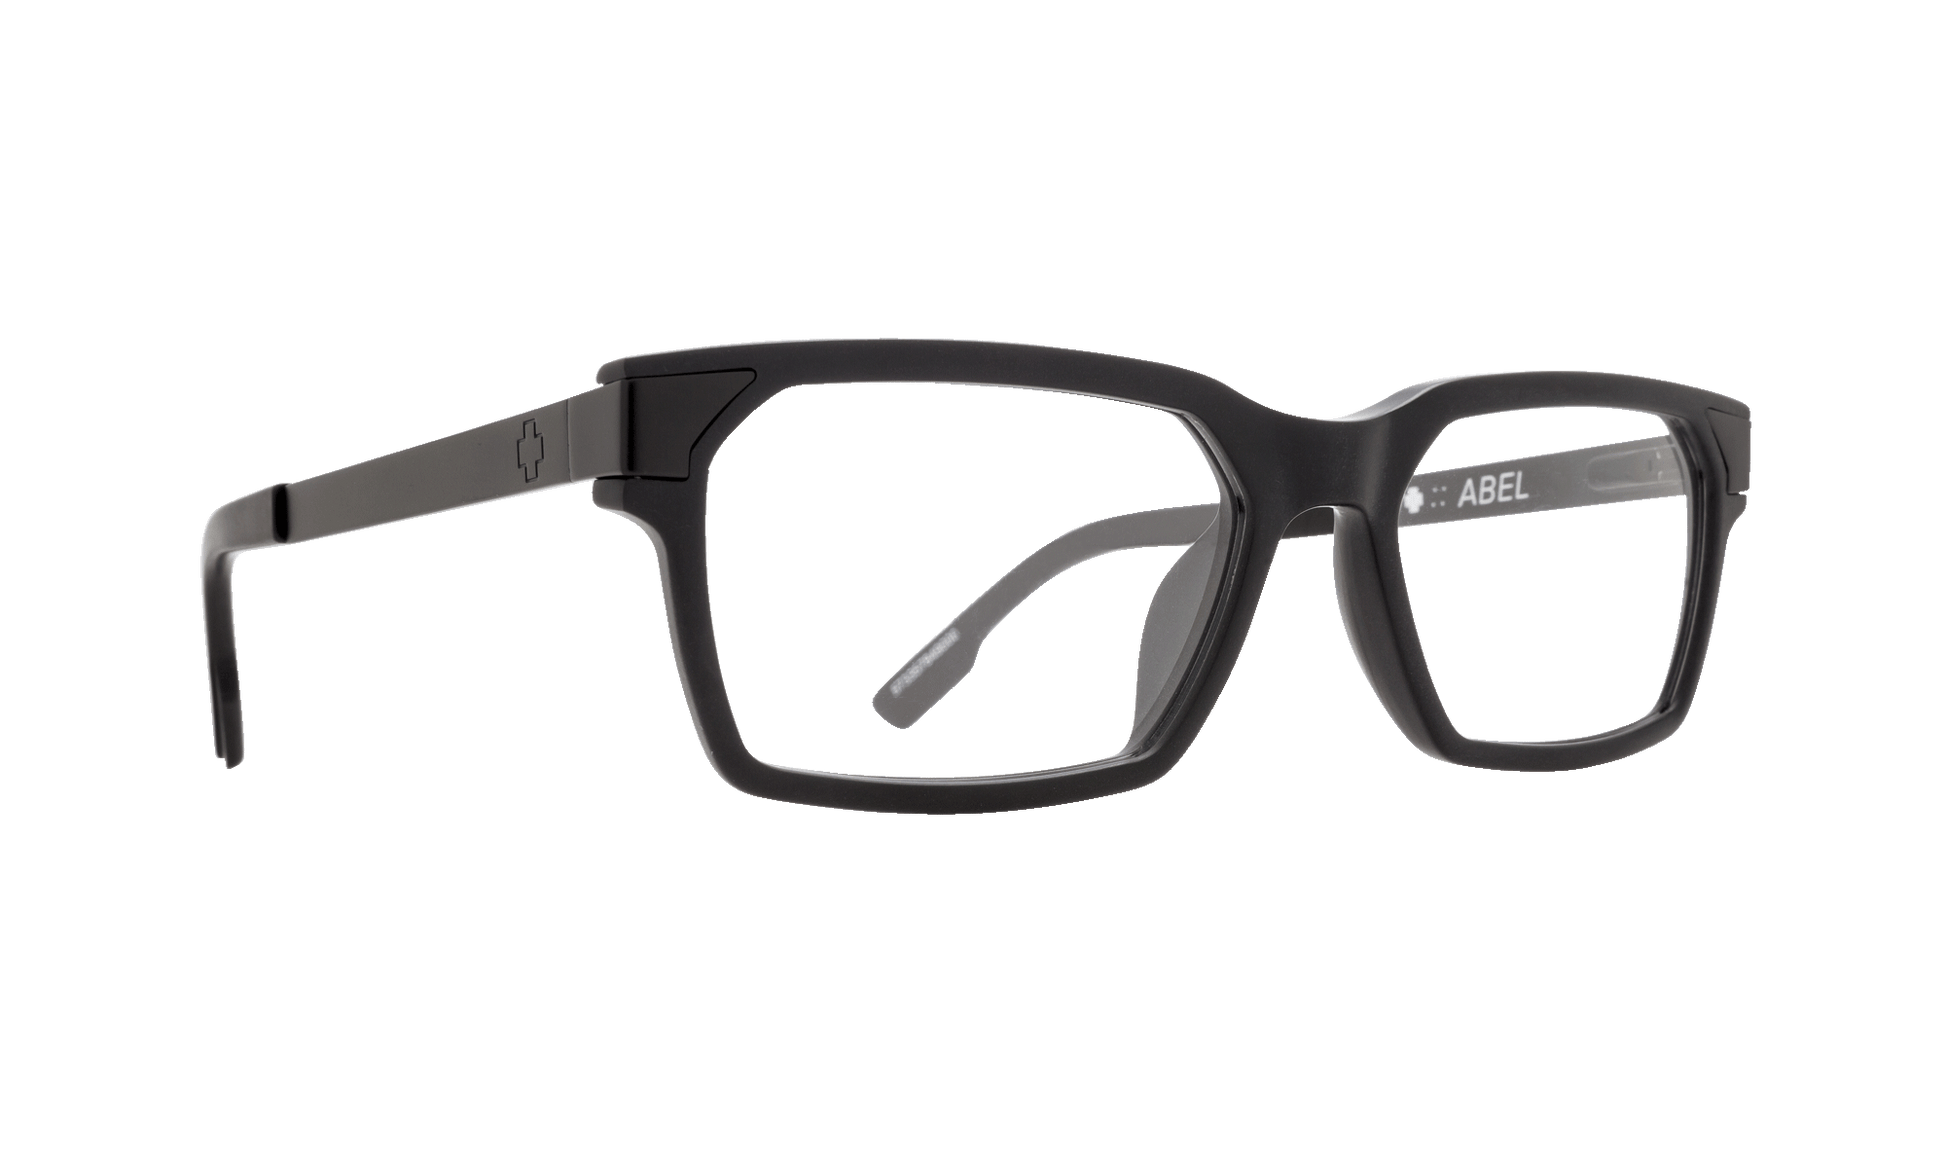 SPY ABEL Eyeglasses   Matte Black/Matte Black  53-17-145